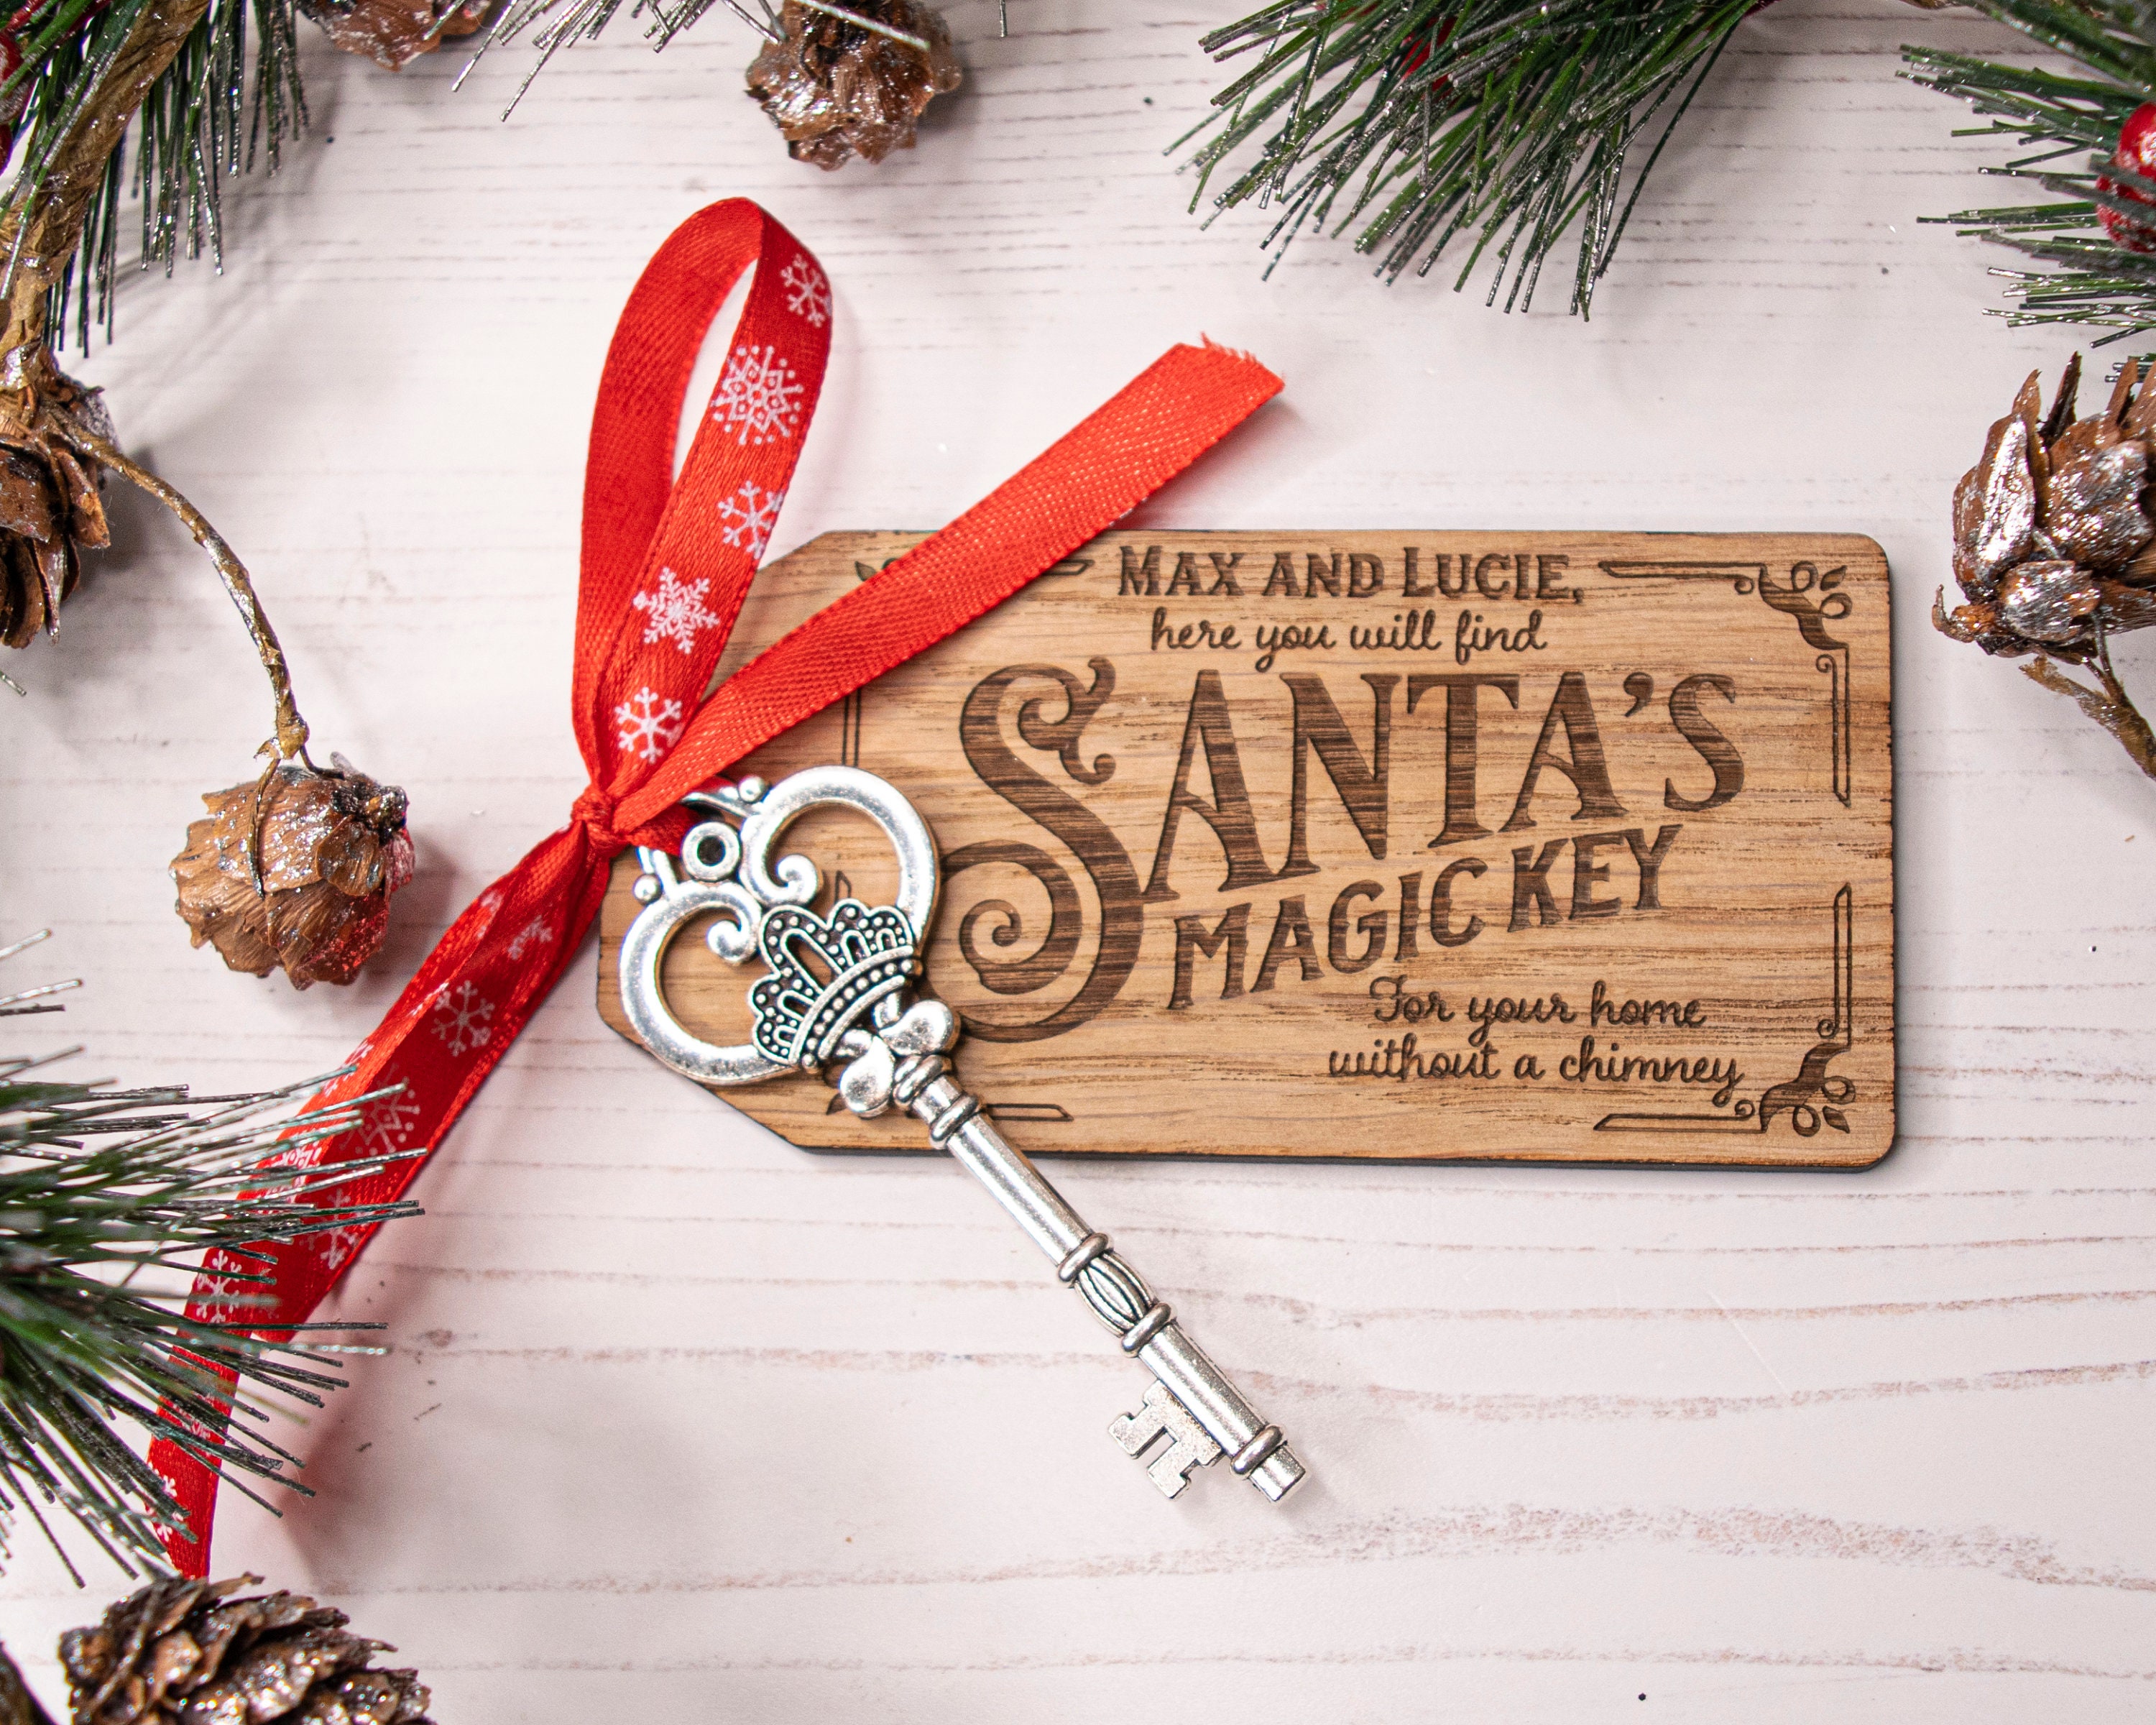 Santa's Magic Key Personalized Christmas Eve Key Santa's Key Magical Key  for Homes Without a Chimney Christmas Key Santa Key 